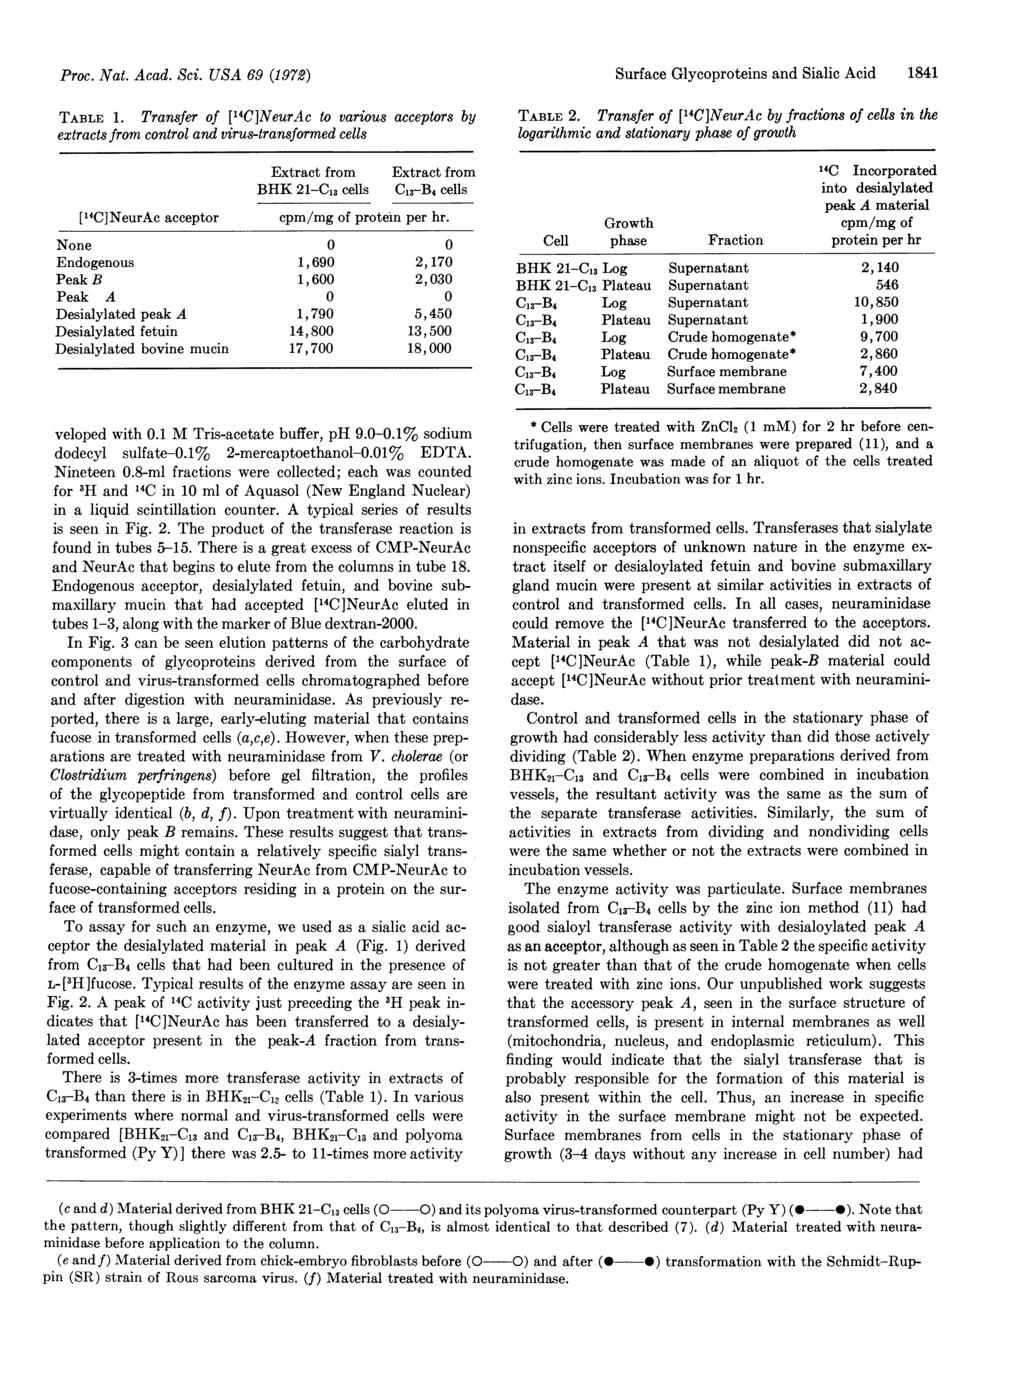 Proc. Nat. Acad. Sci. USA 69 (1972) TABLE 1.